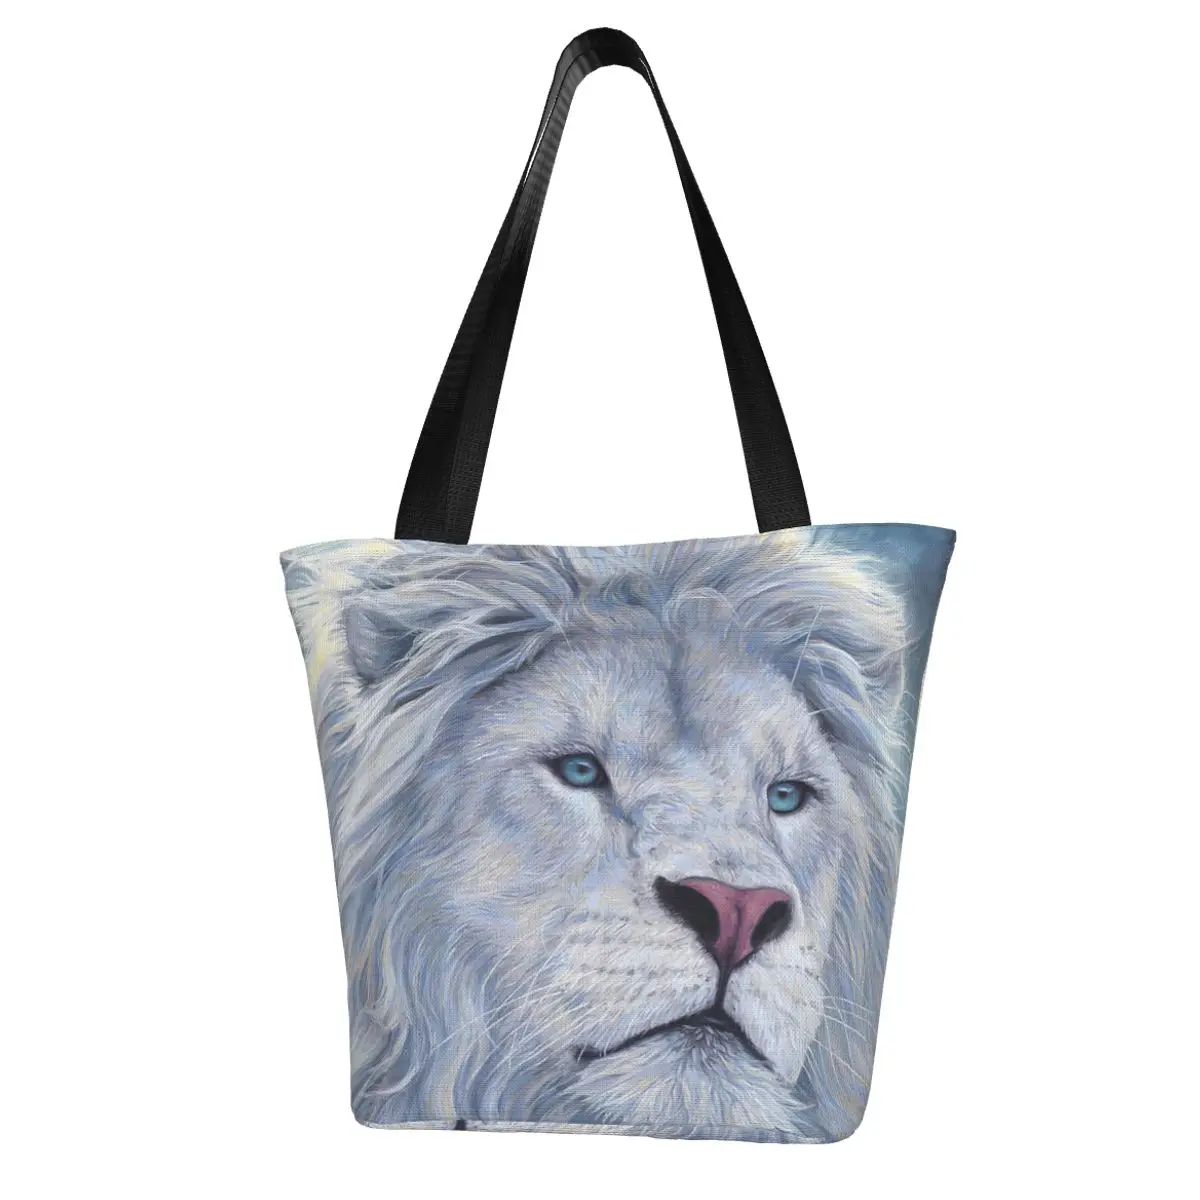 White Lion Shopping Bag Aesthetic Cloth Outdoor Handbag Female Fashion Bags